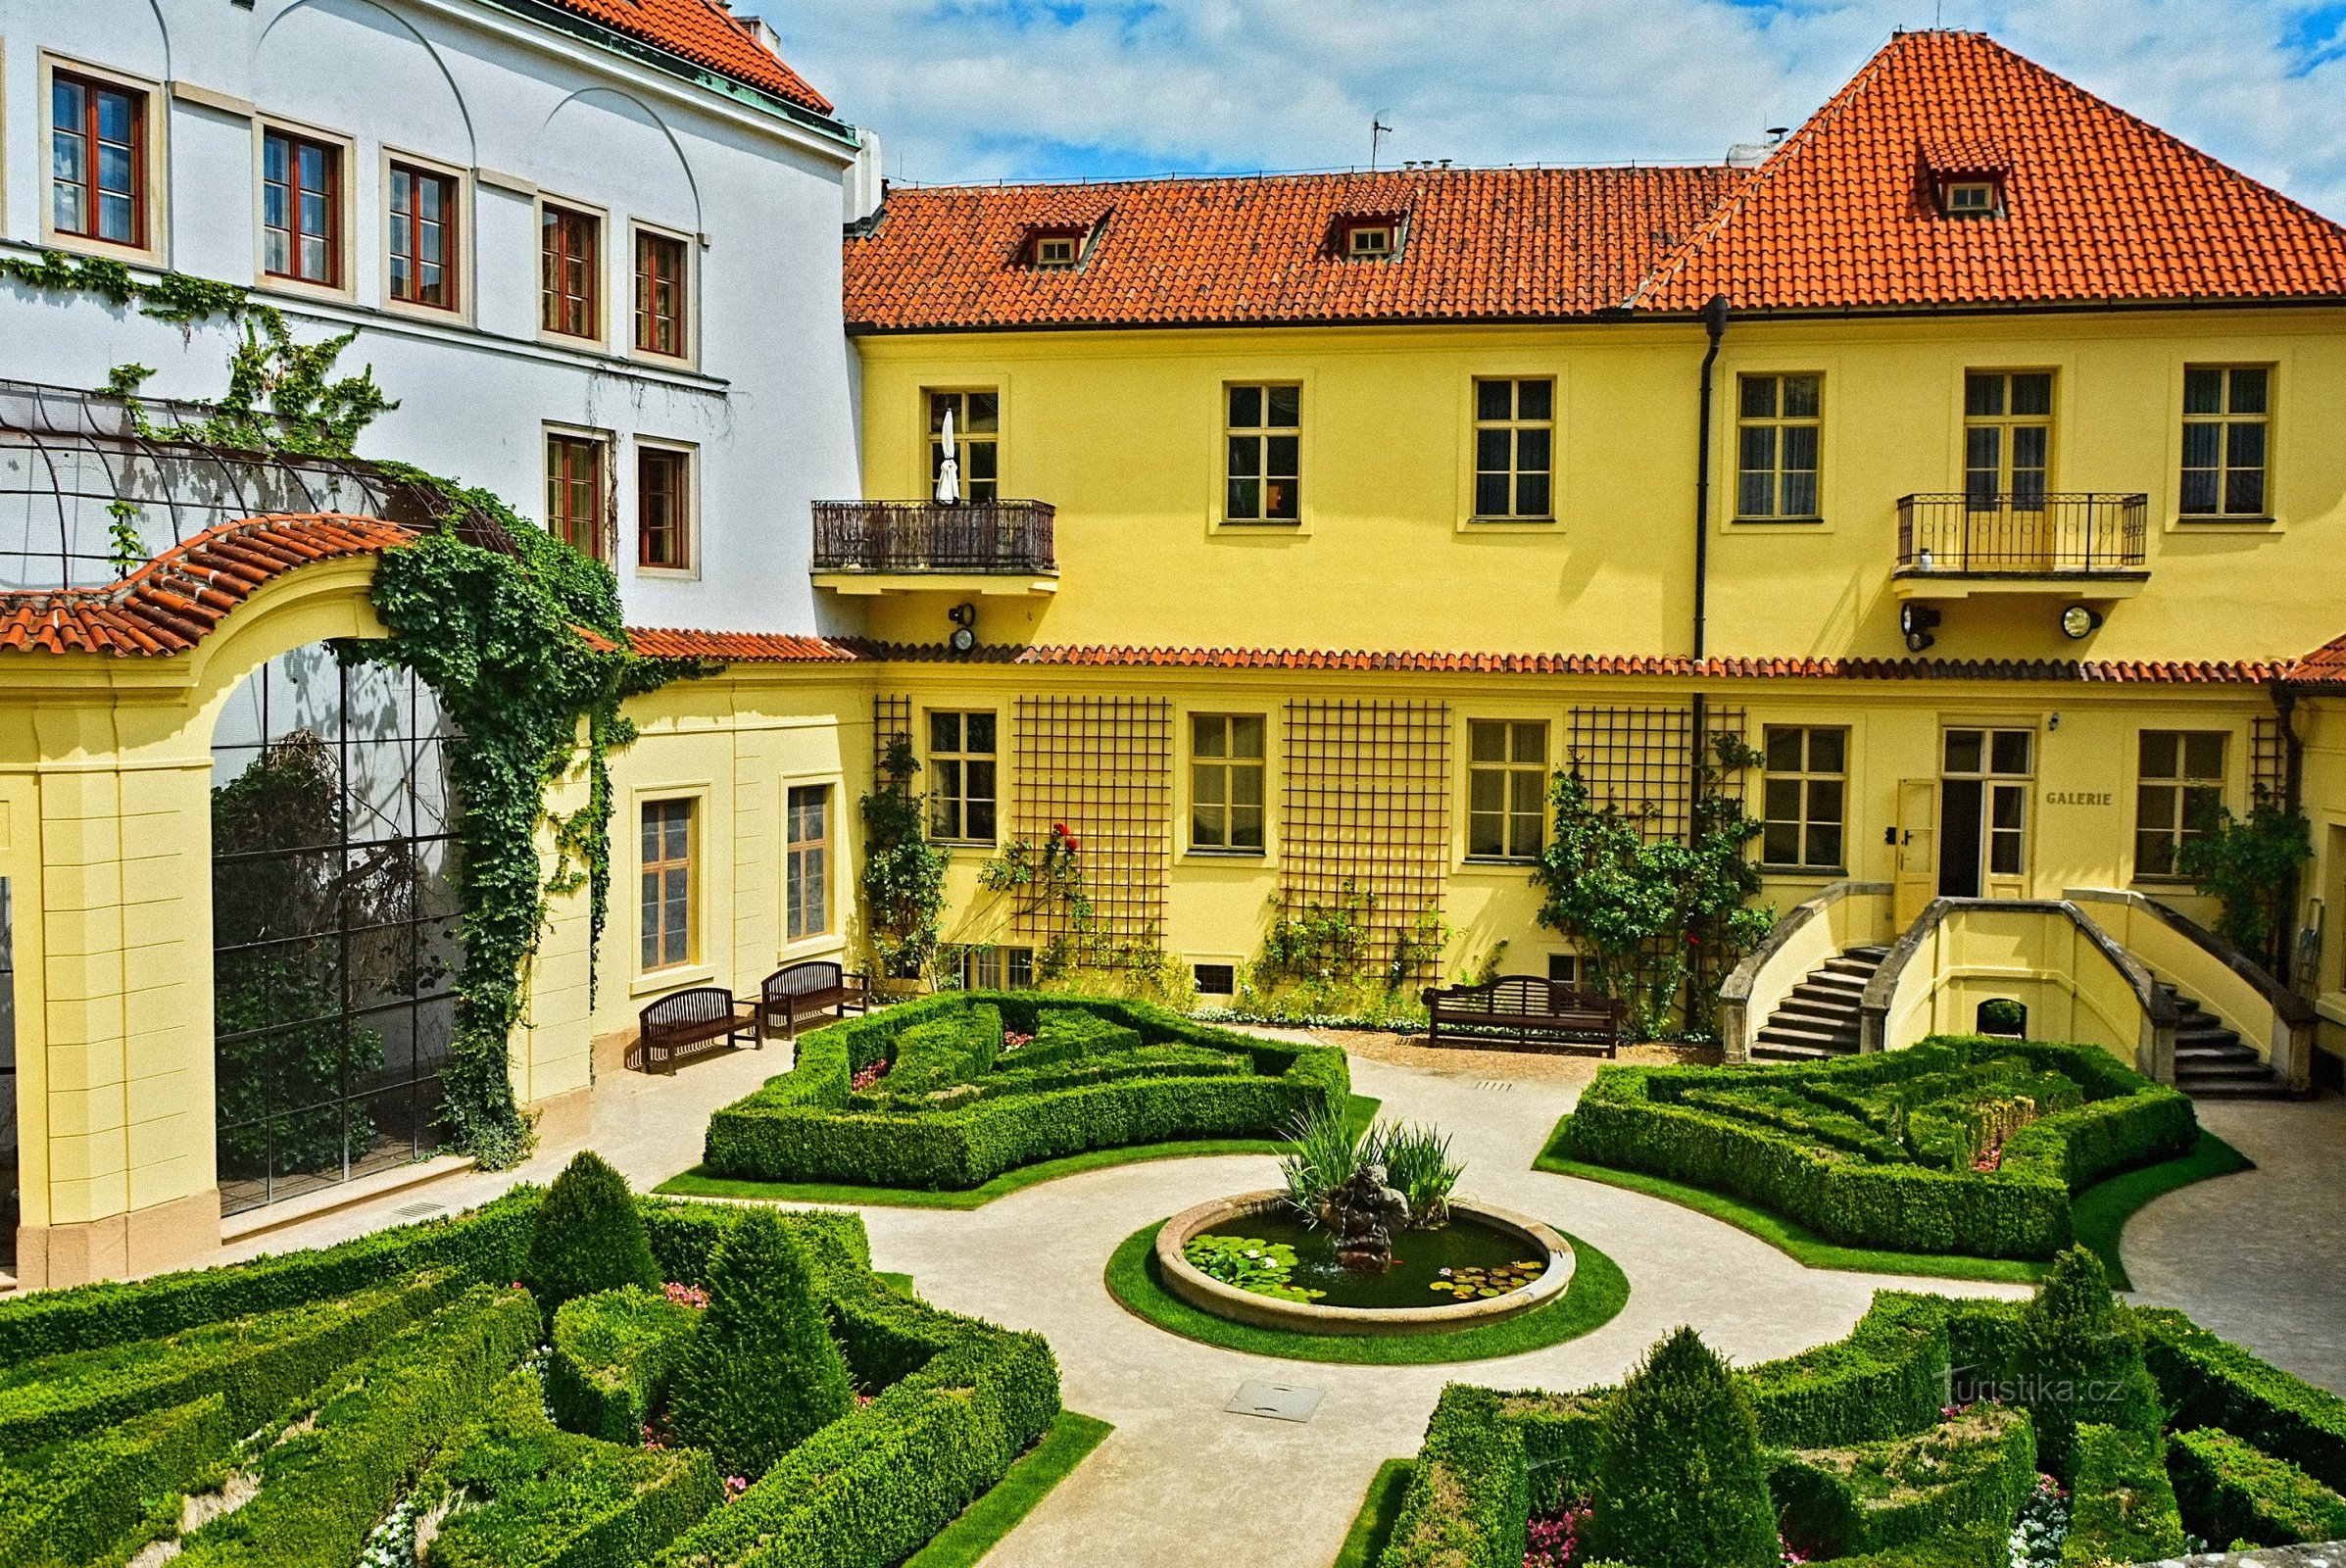 Vrtbovská-puutarha, josta on kaunis näkymä Prahaan